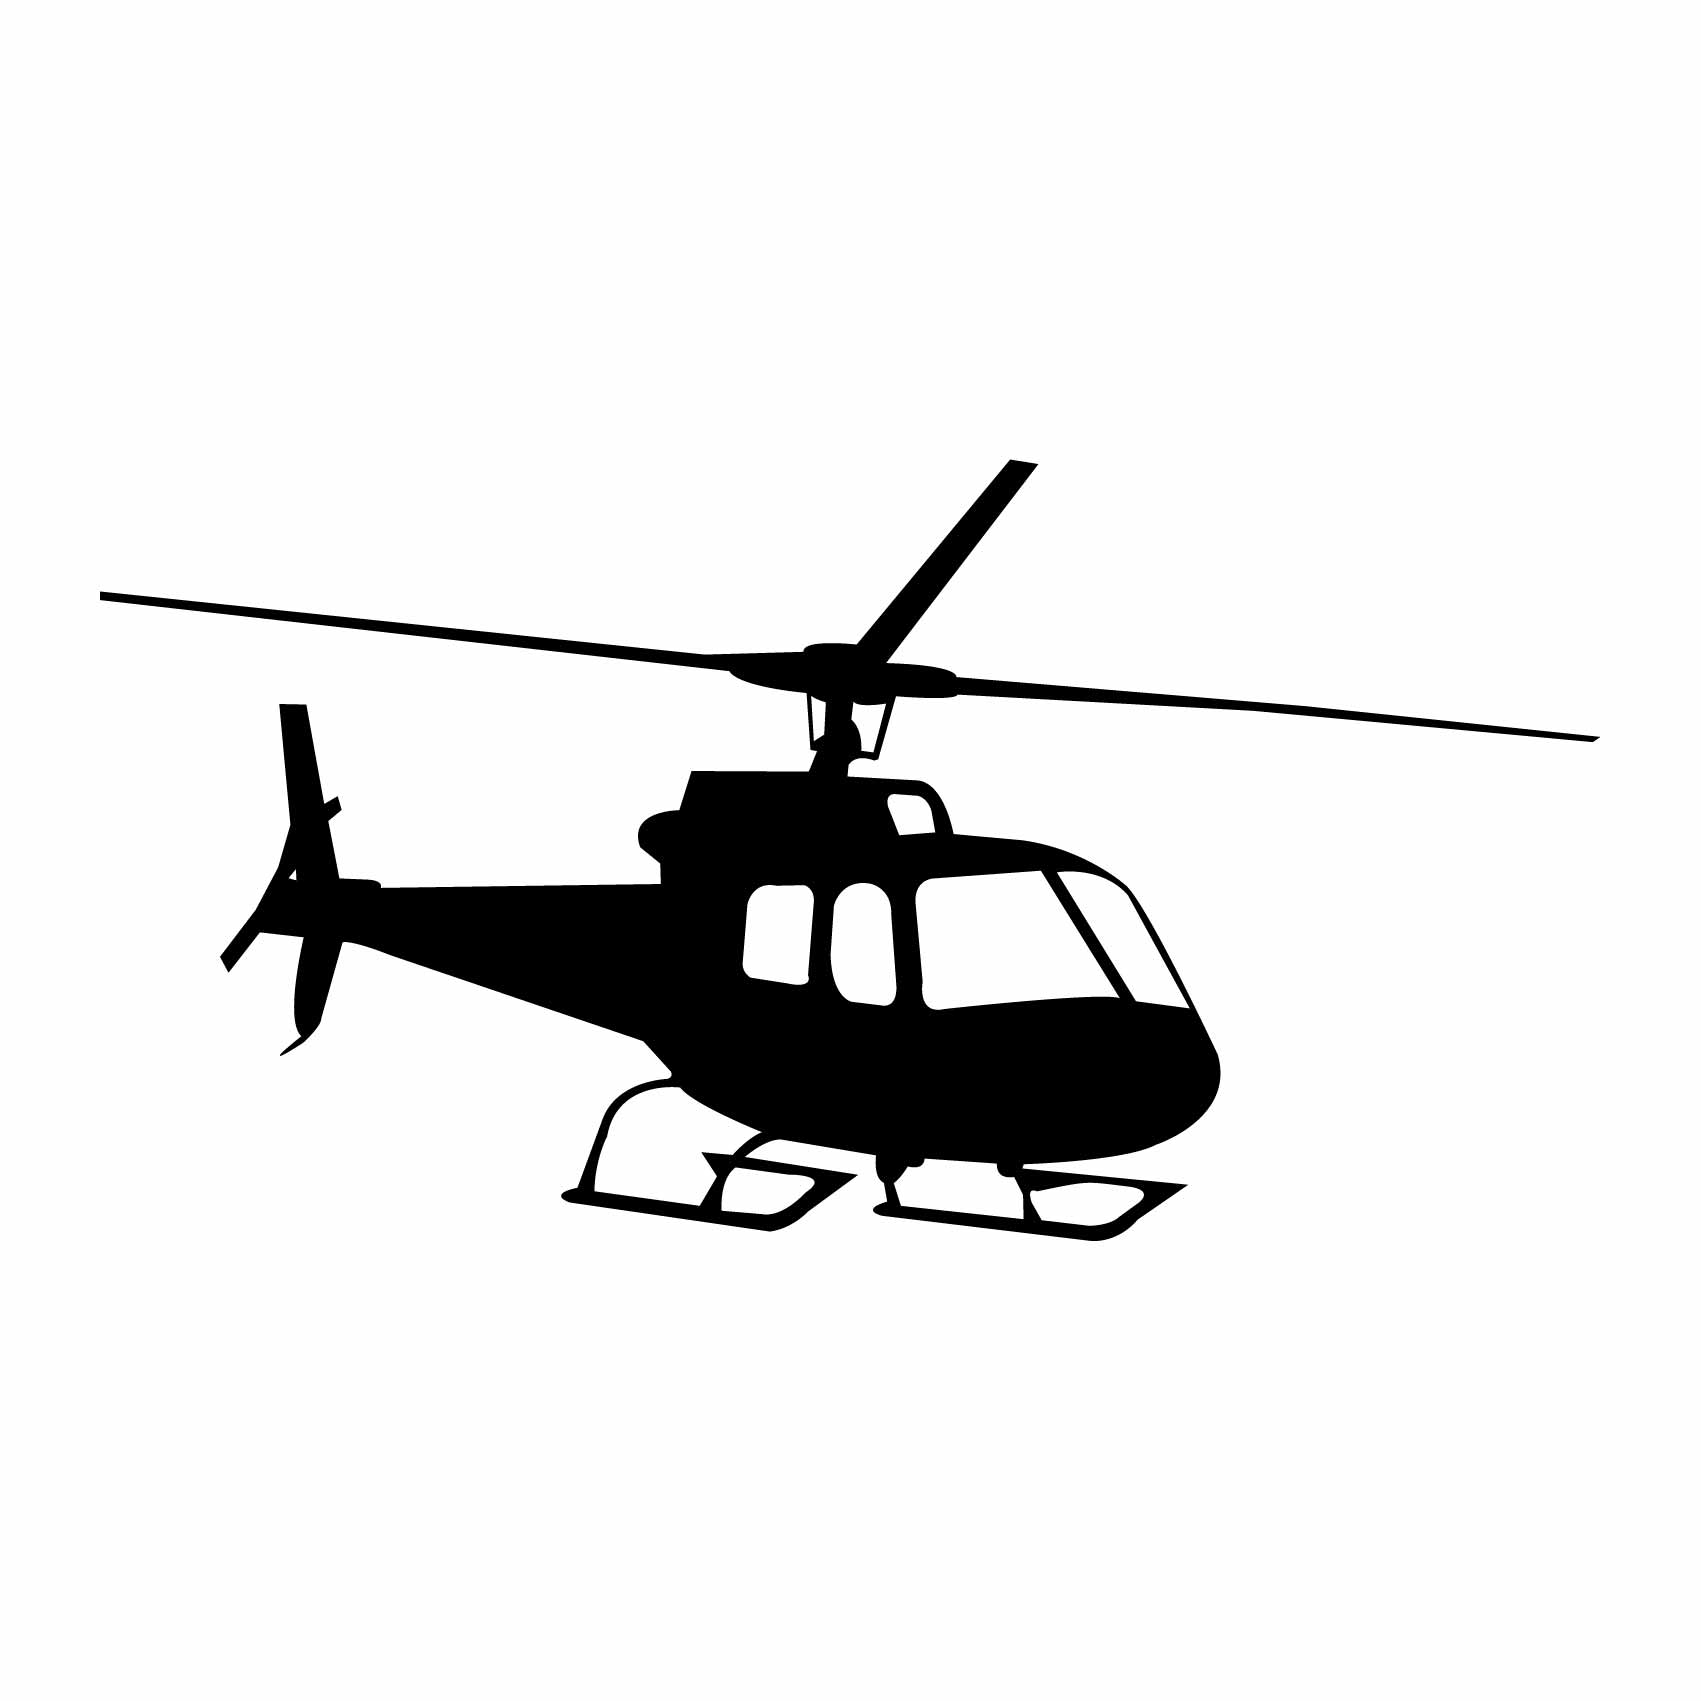 stickers-helicoptere-rapide-ref3helicoptere-autocollant-muraux-aviation-sticker-hélicoptere-chambre-enfant-deco-décoration-(2)